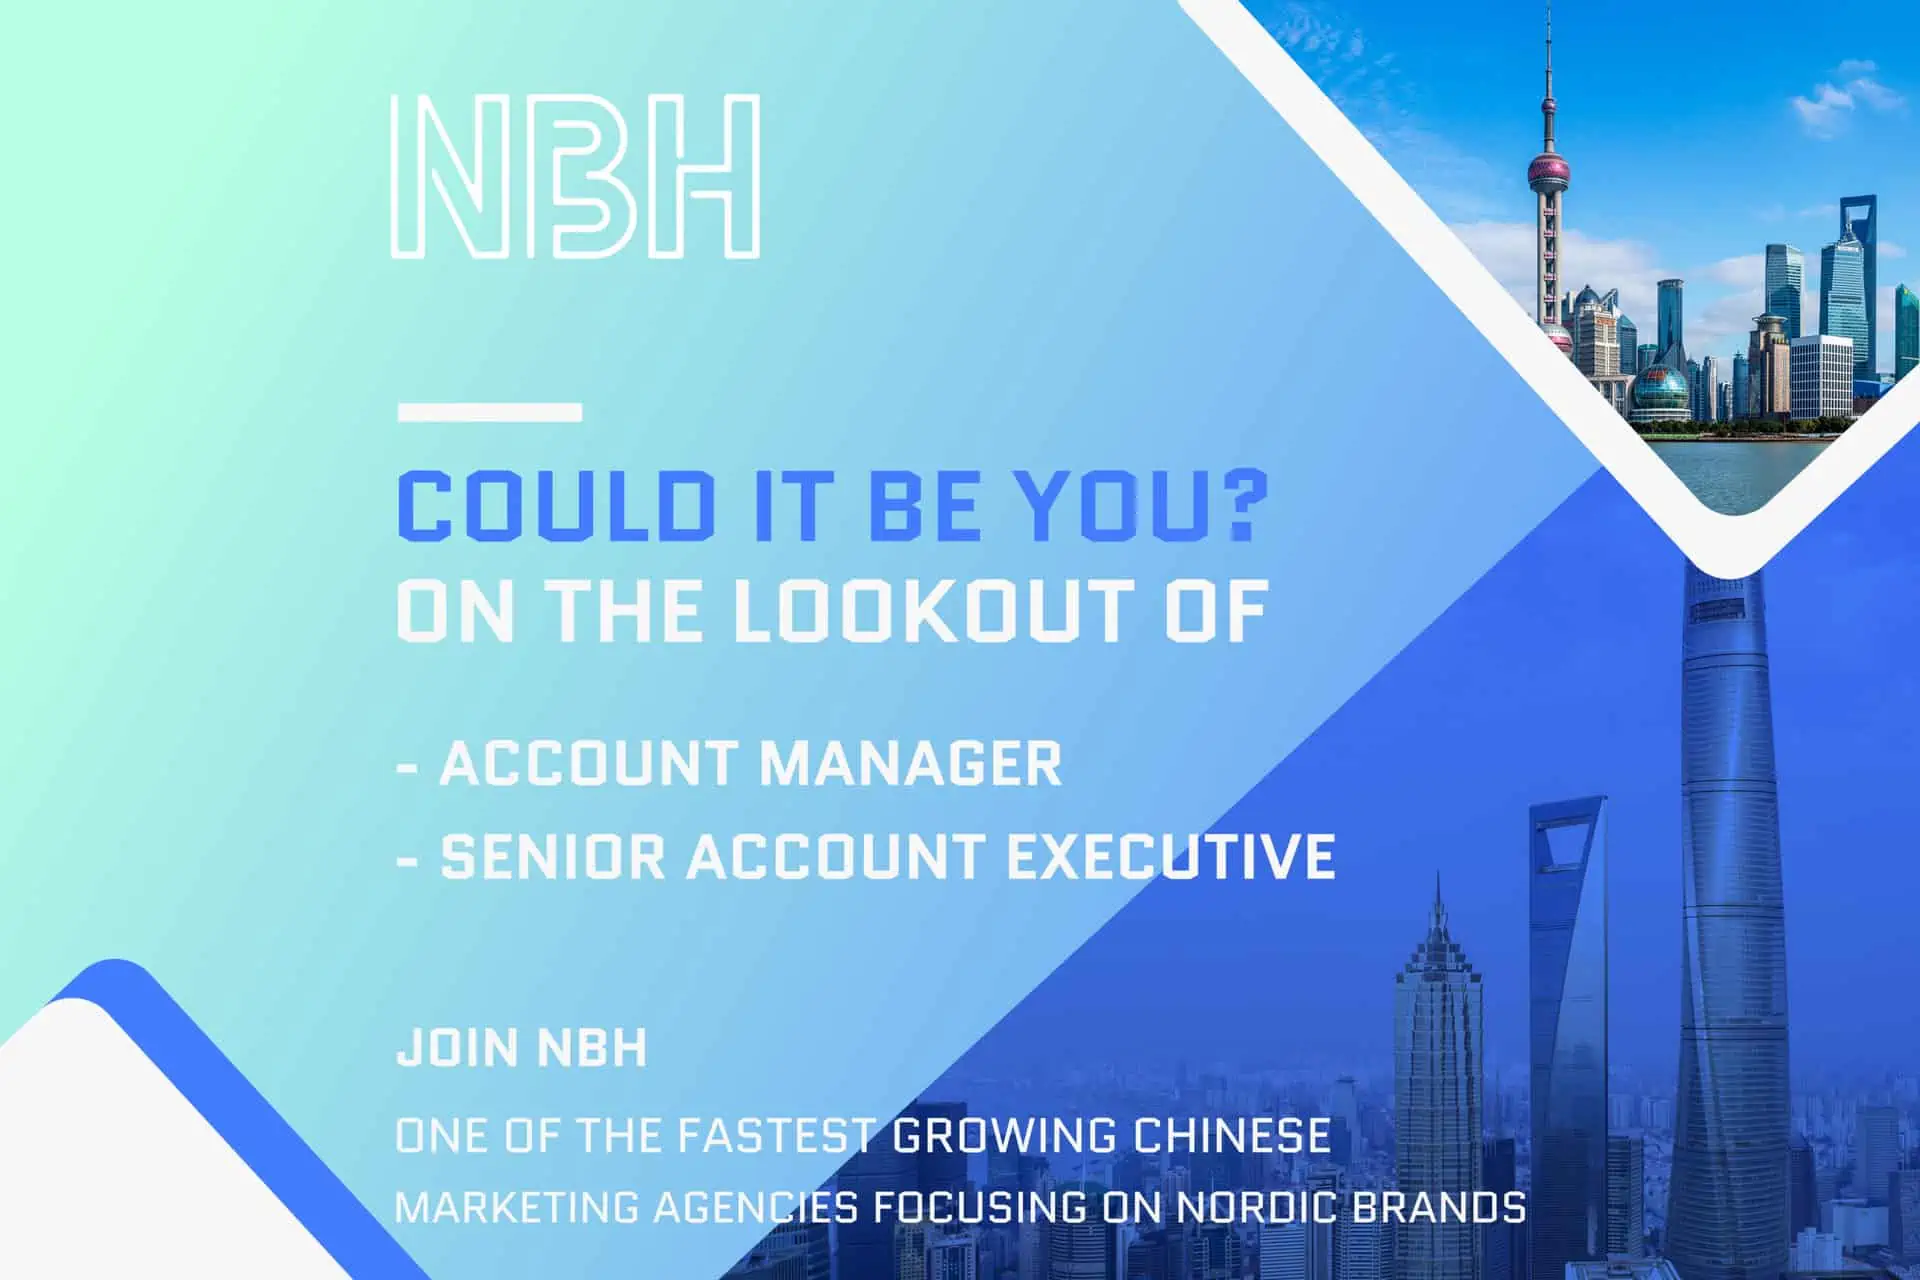 NBH 上海办事处提供新的职位空缺